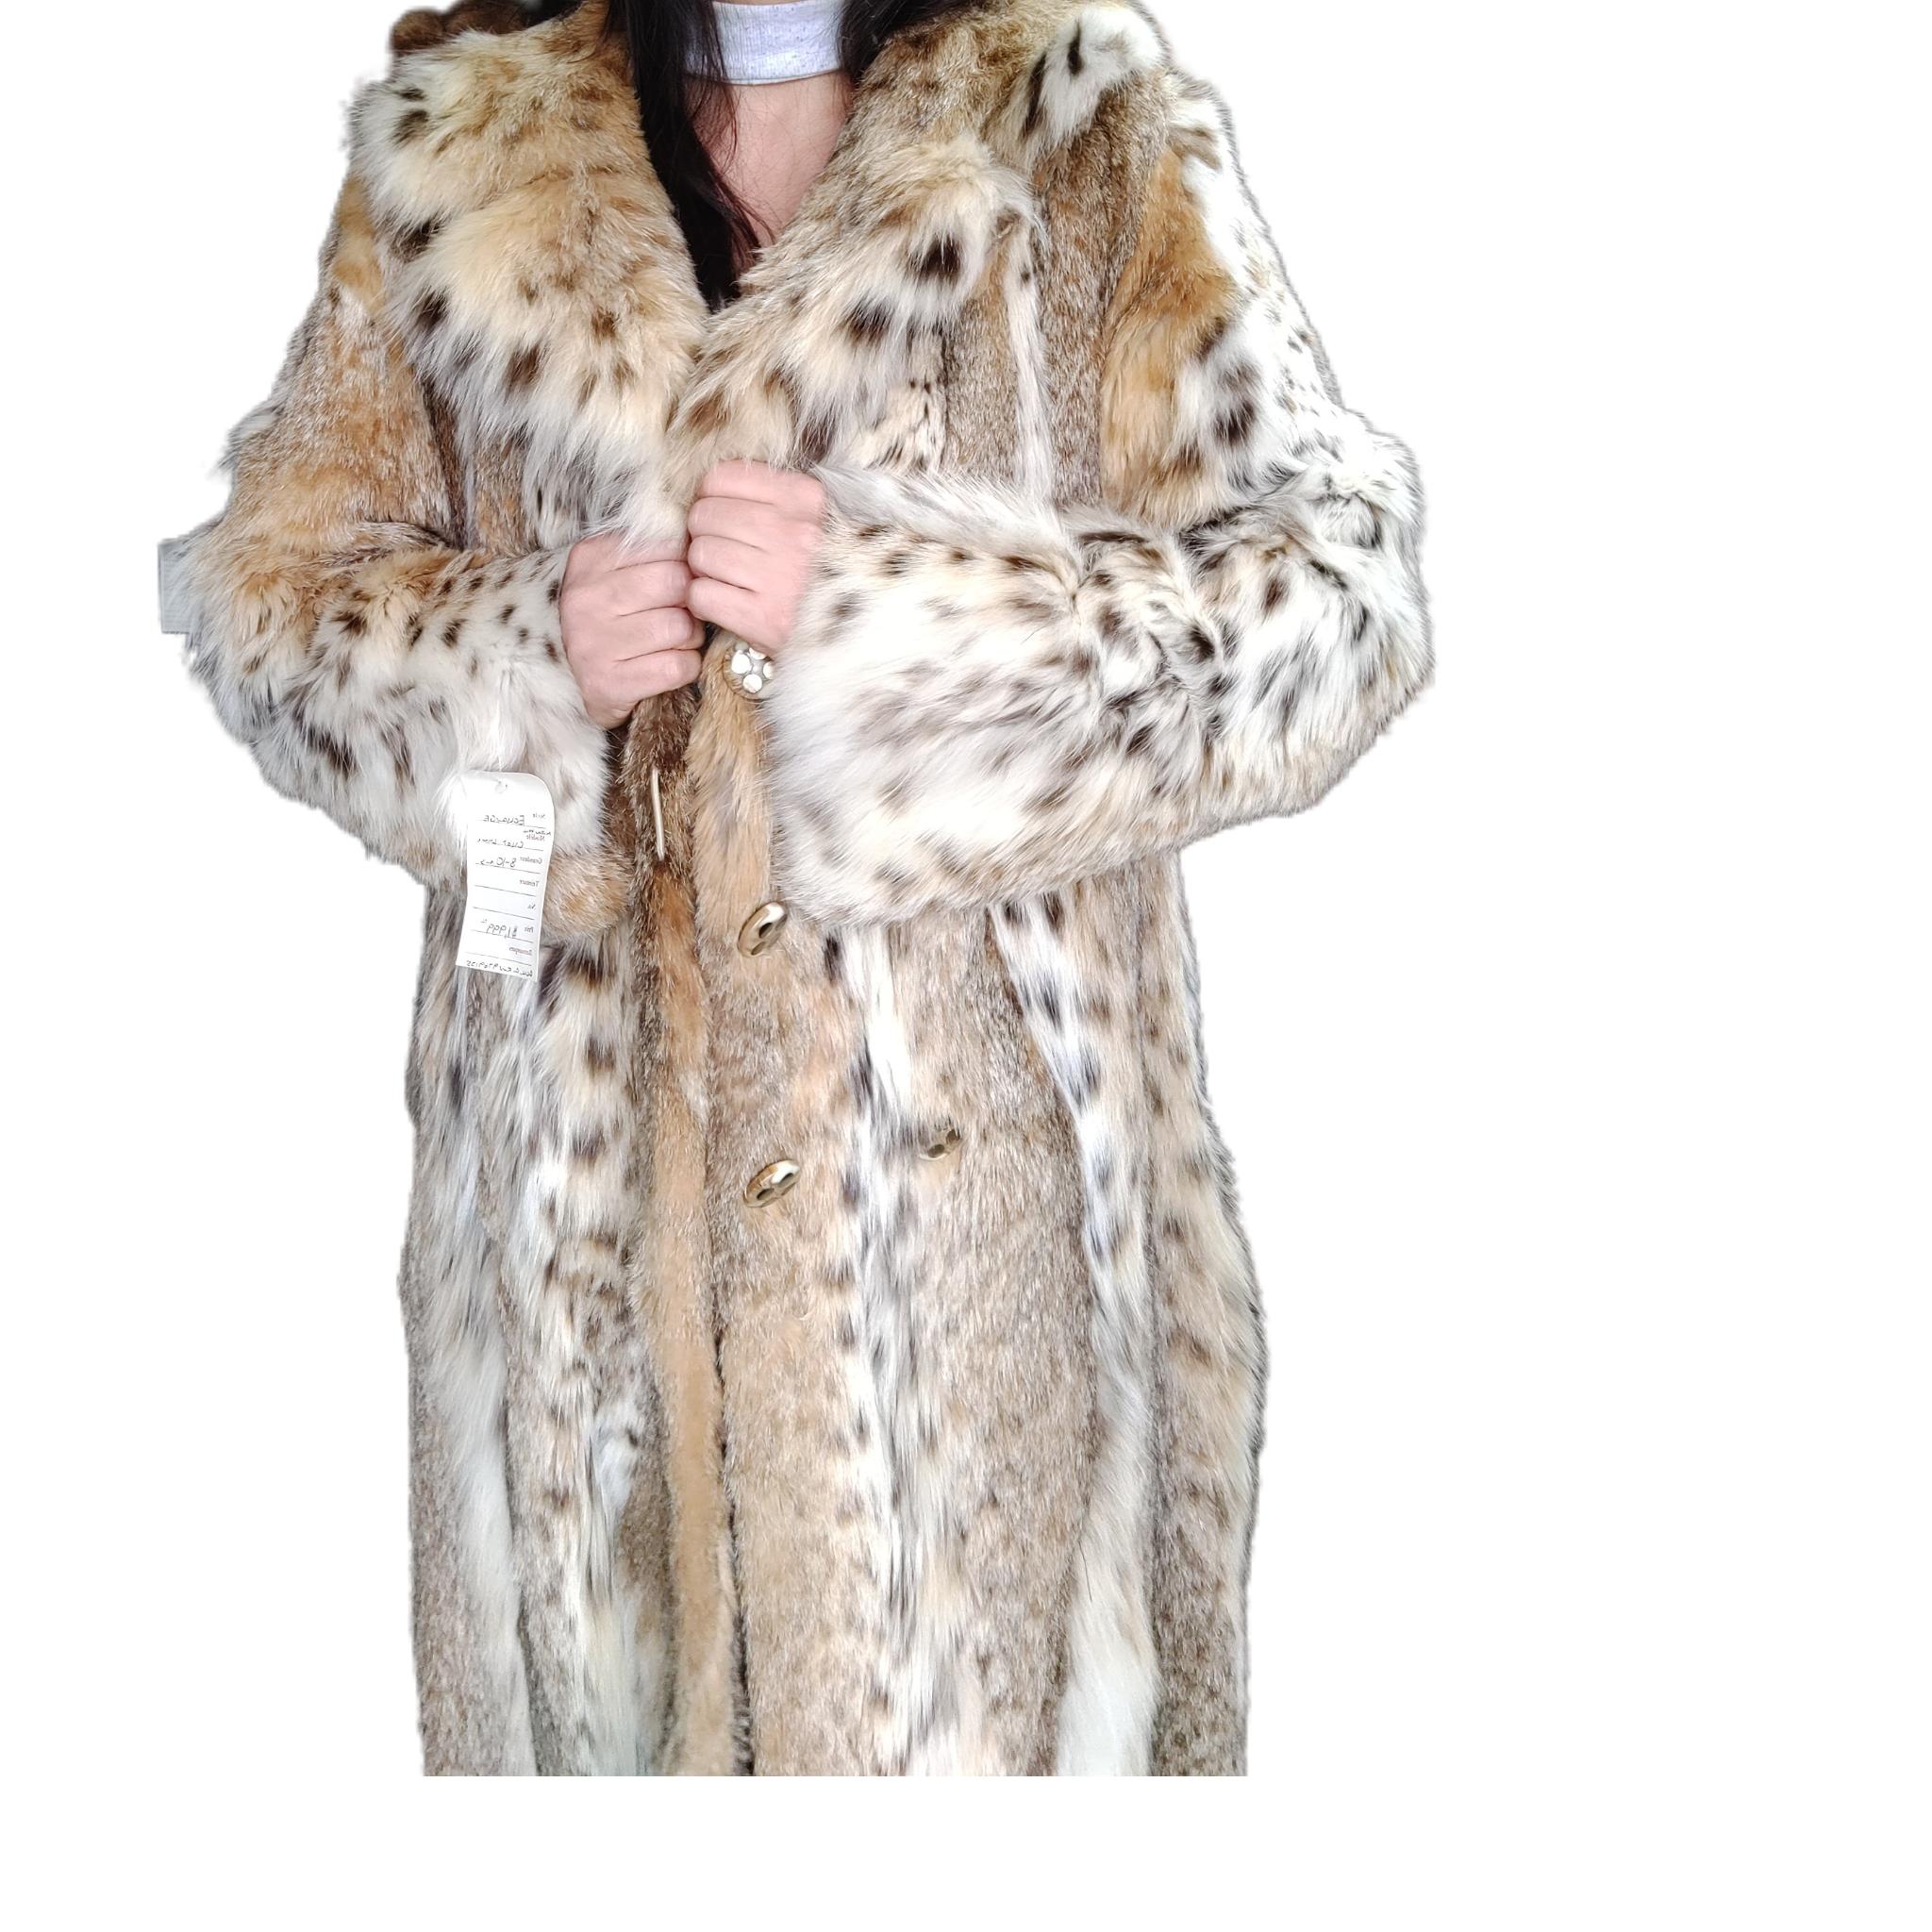 Women's Brand new Vintage lynx fur coat size 4-6